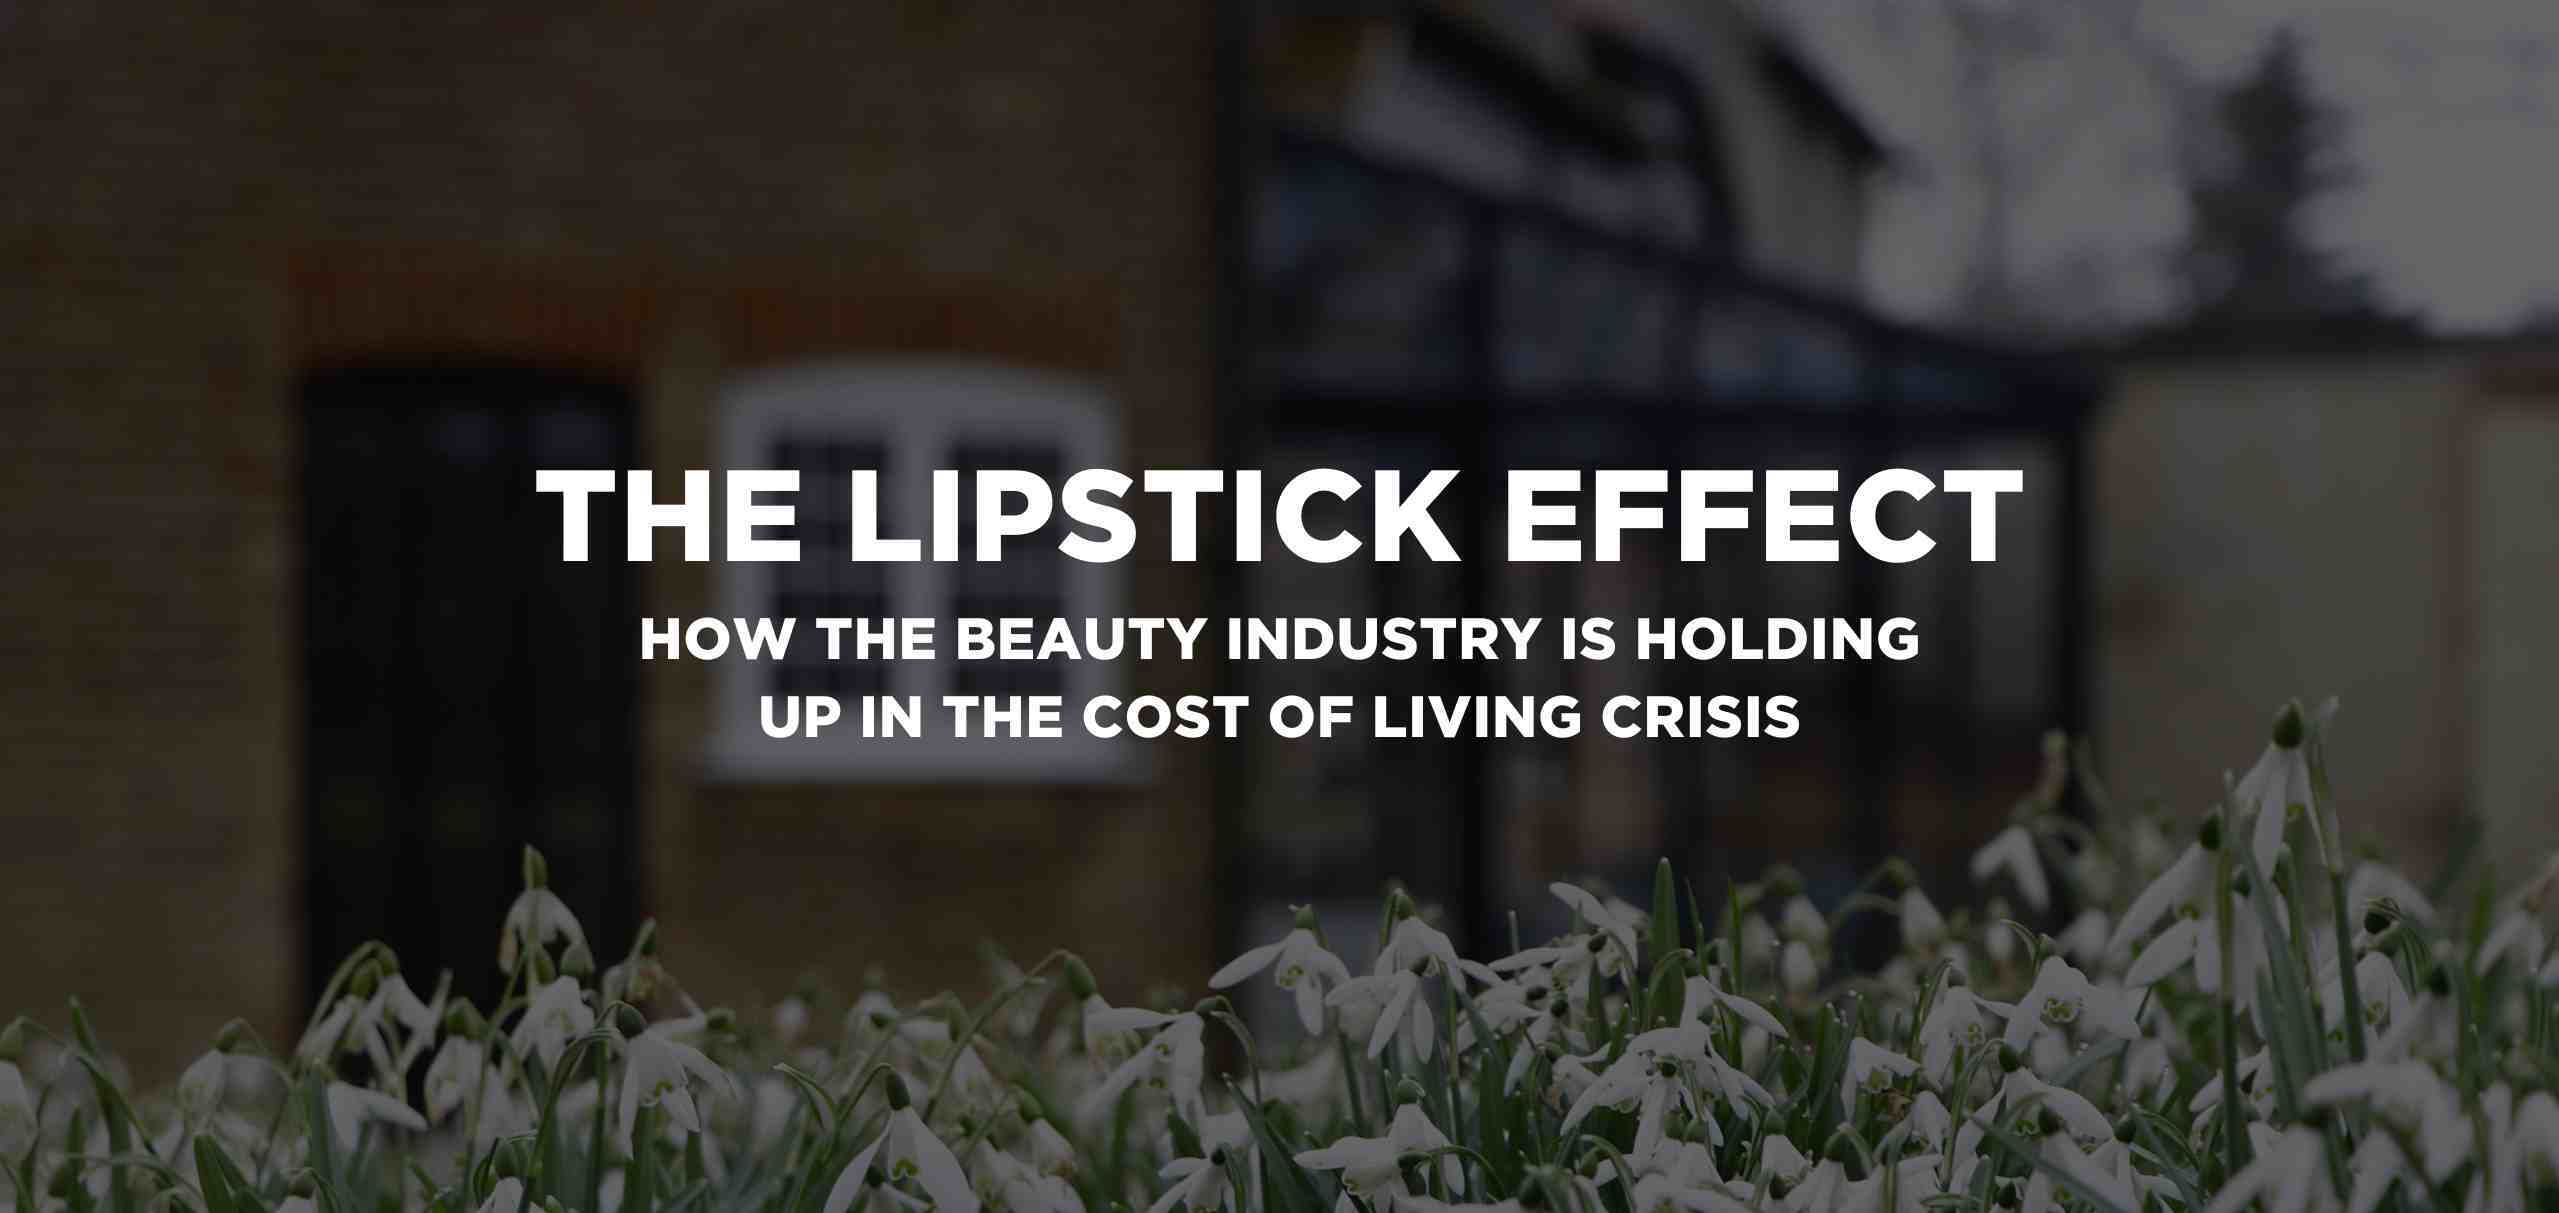 The lipstick effect